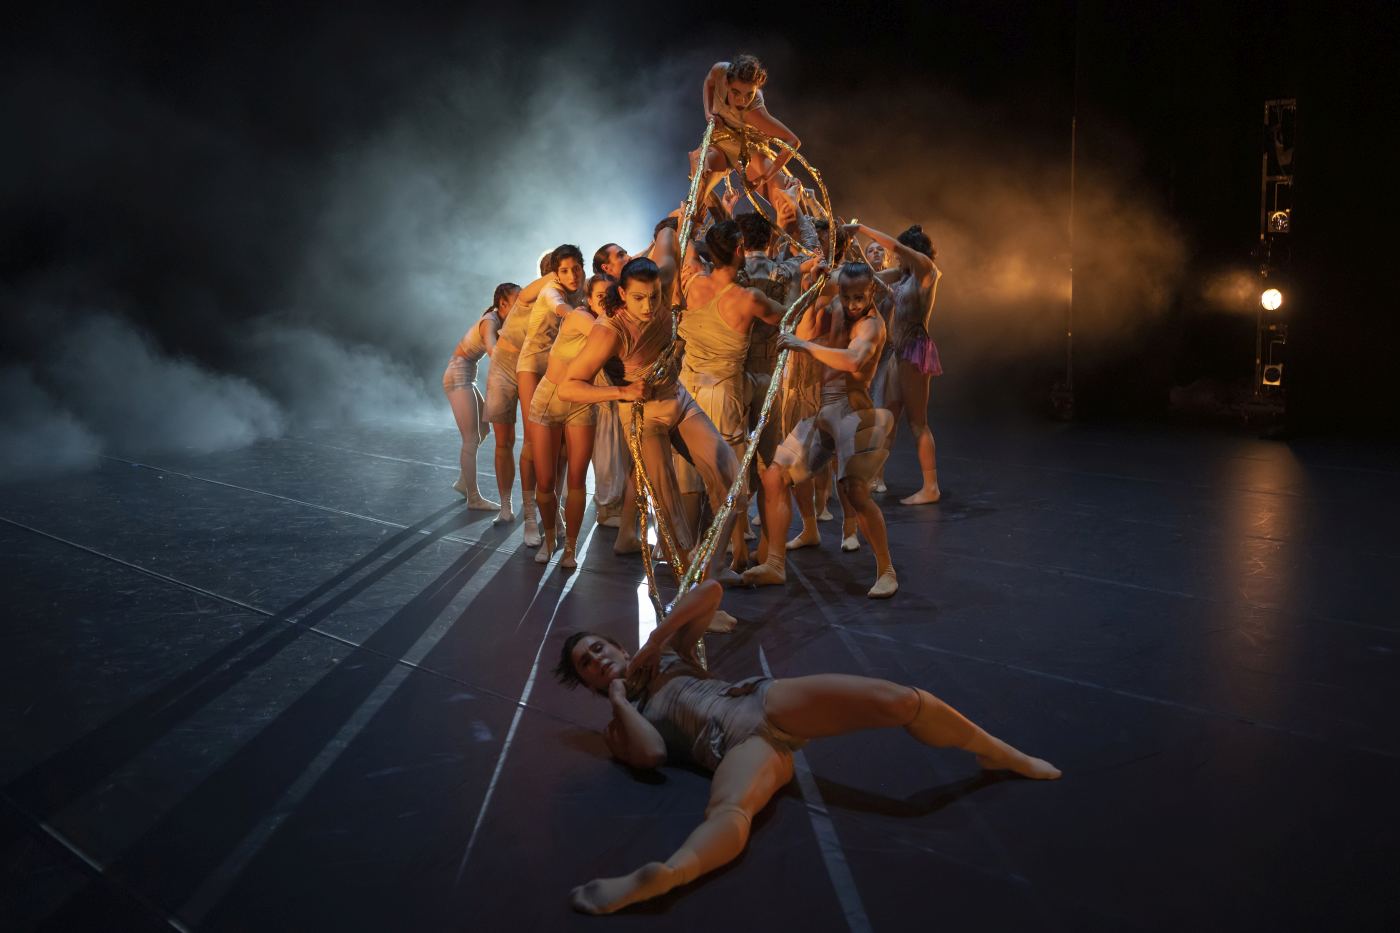 9. S.Tozzi, A.Tavares, and ensemble, “Narrenschiff” by G.Montero, Ballet of the State Theater Nuremberg 2022 © J.Vallinas